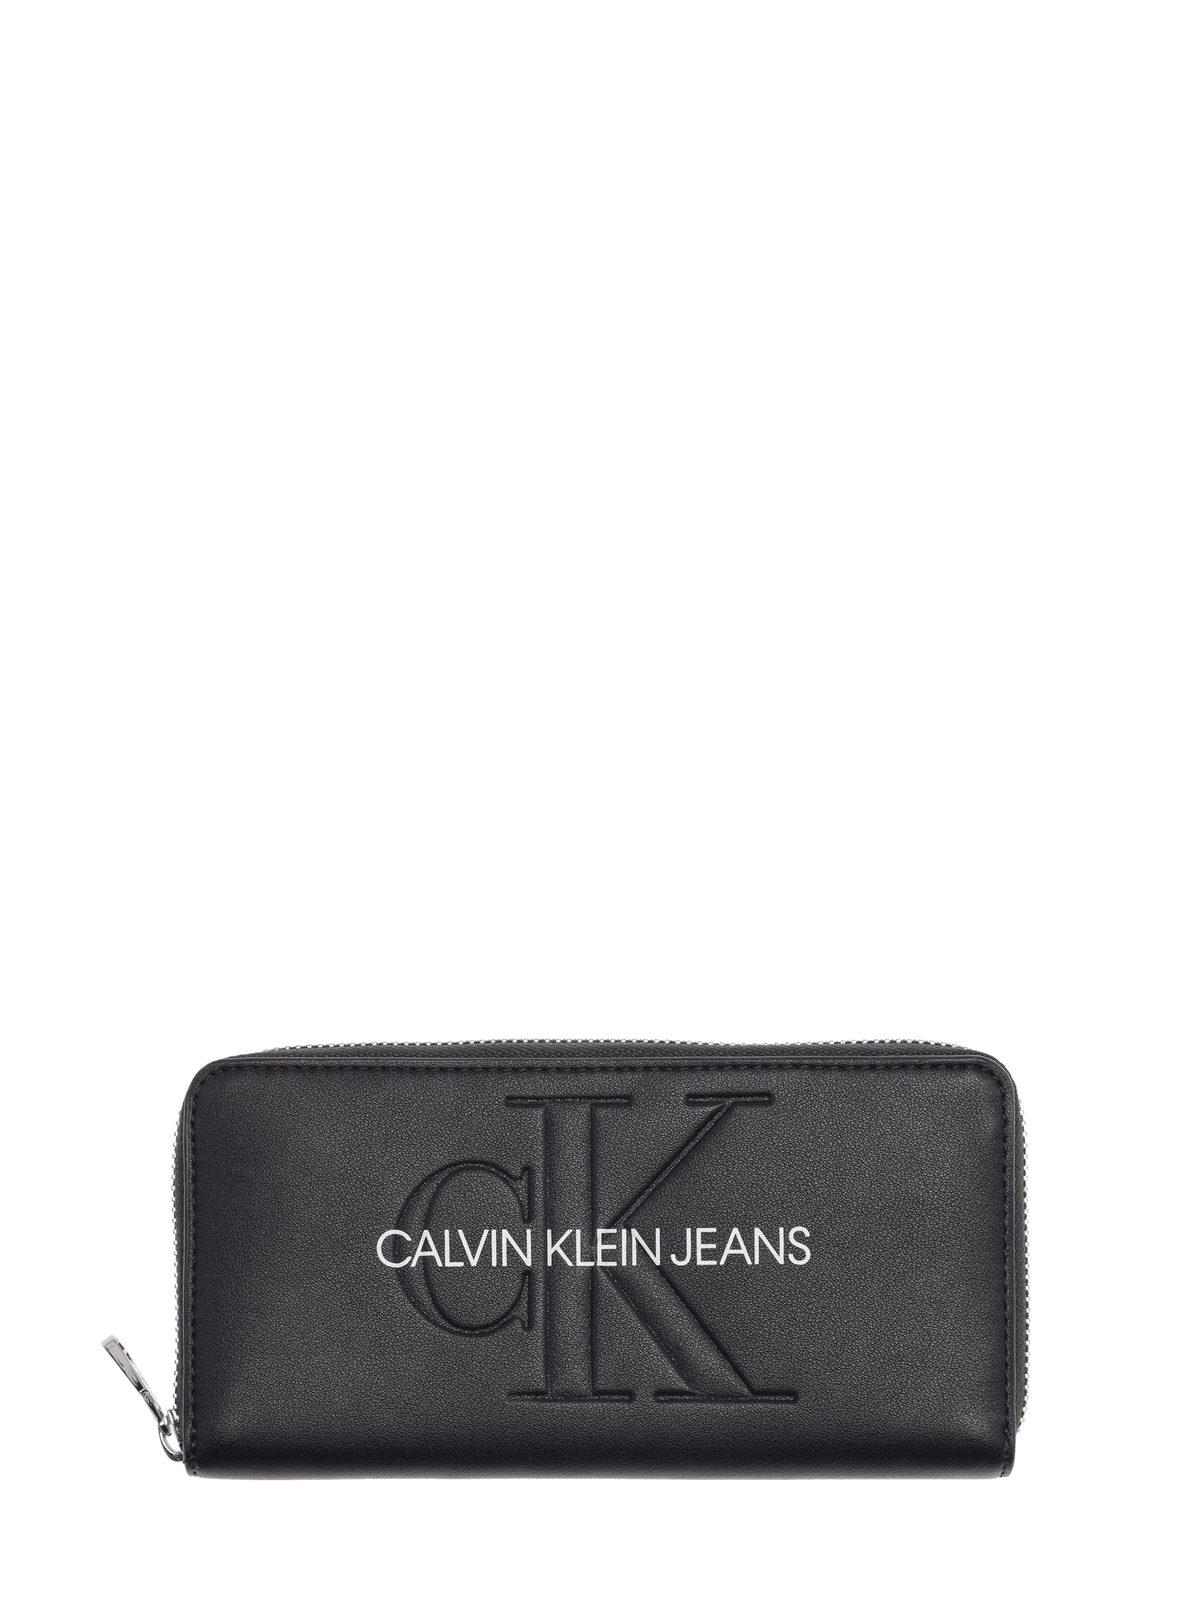 Women's wallet Calvin Klein Jeans 